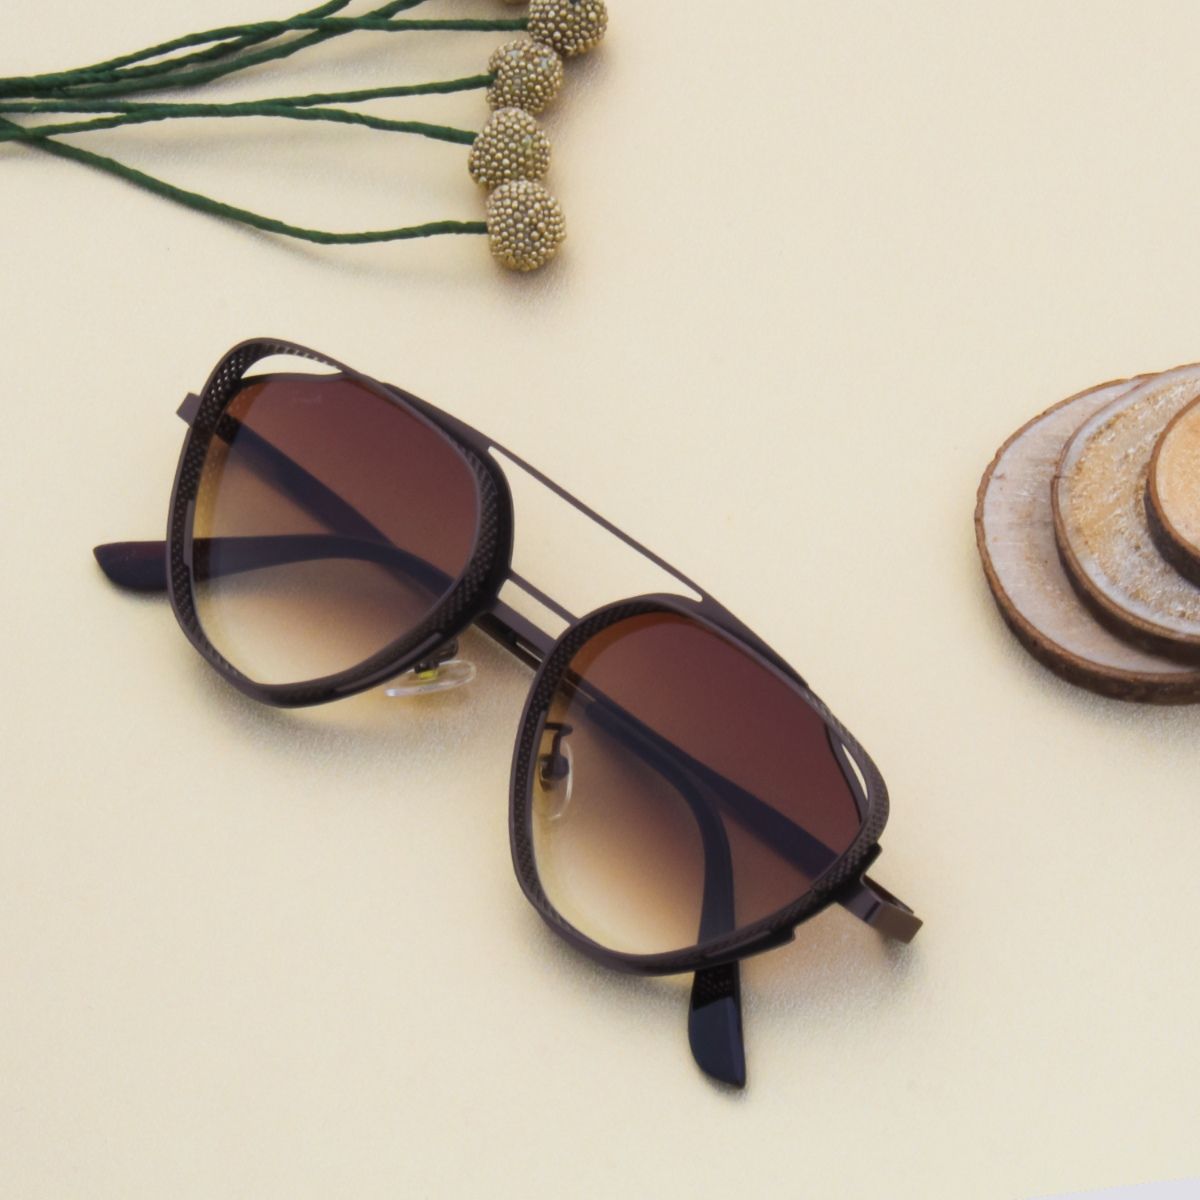 Buy Phenomenal Aviator Sunglasses For women Black-Blue at Amazon.in